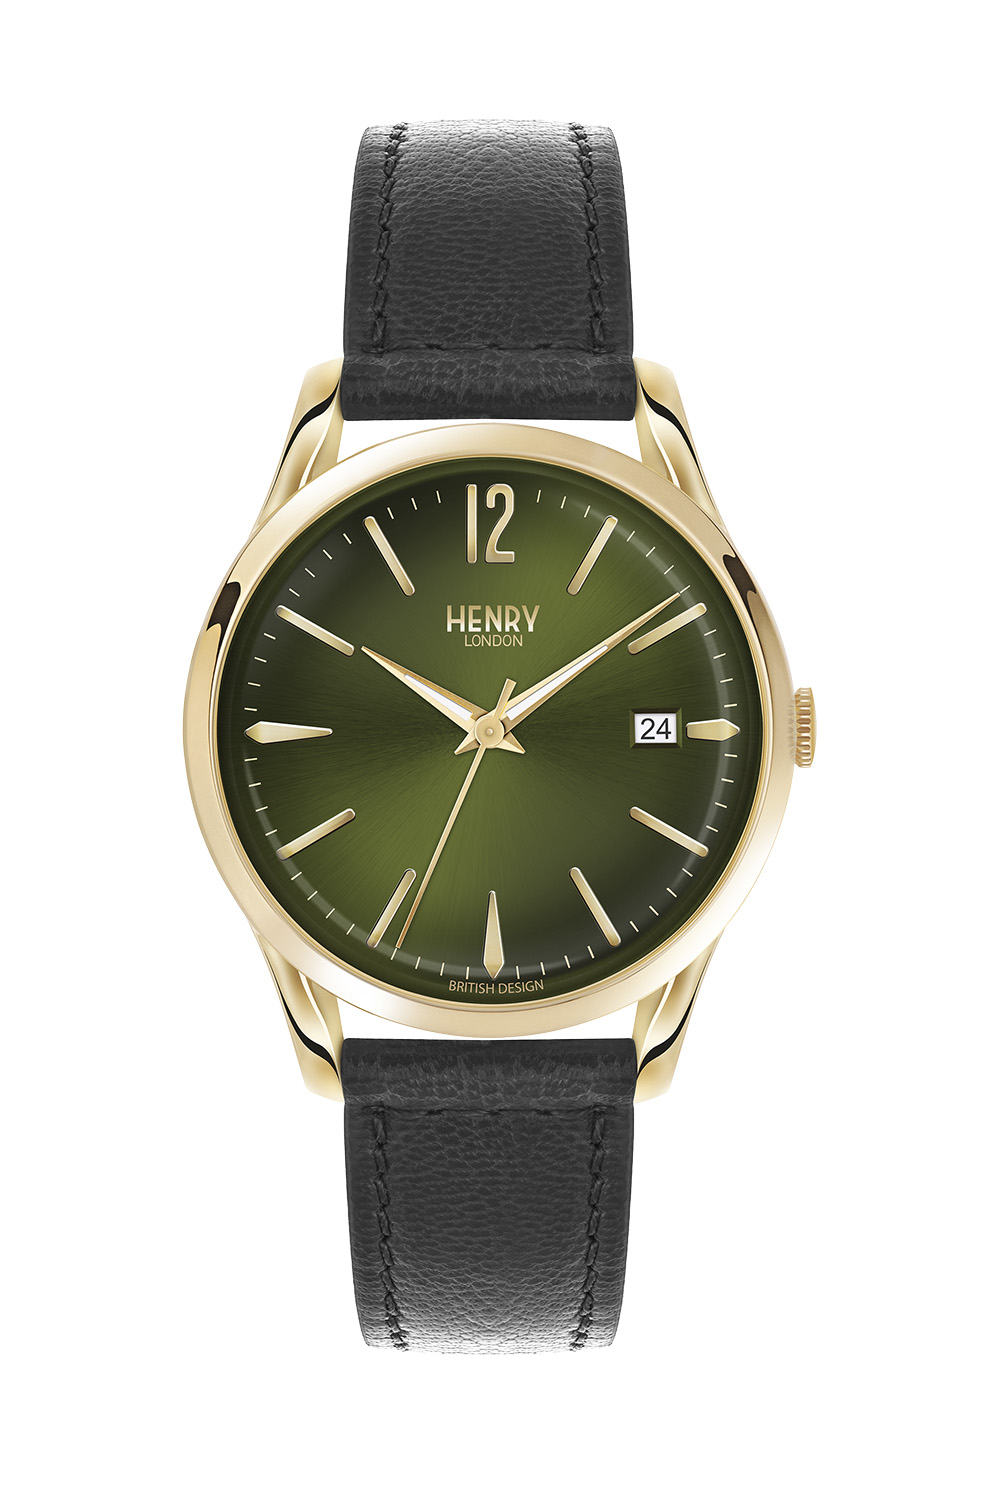 Watch, $279, by Henry London.